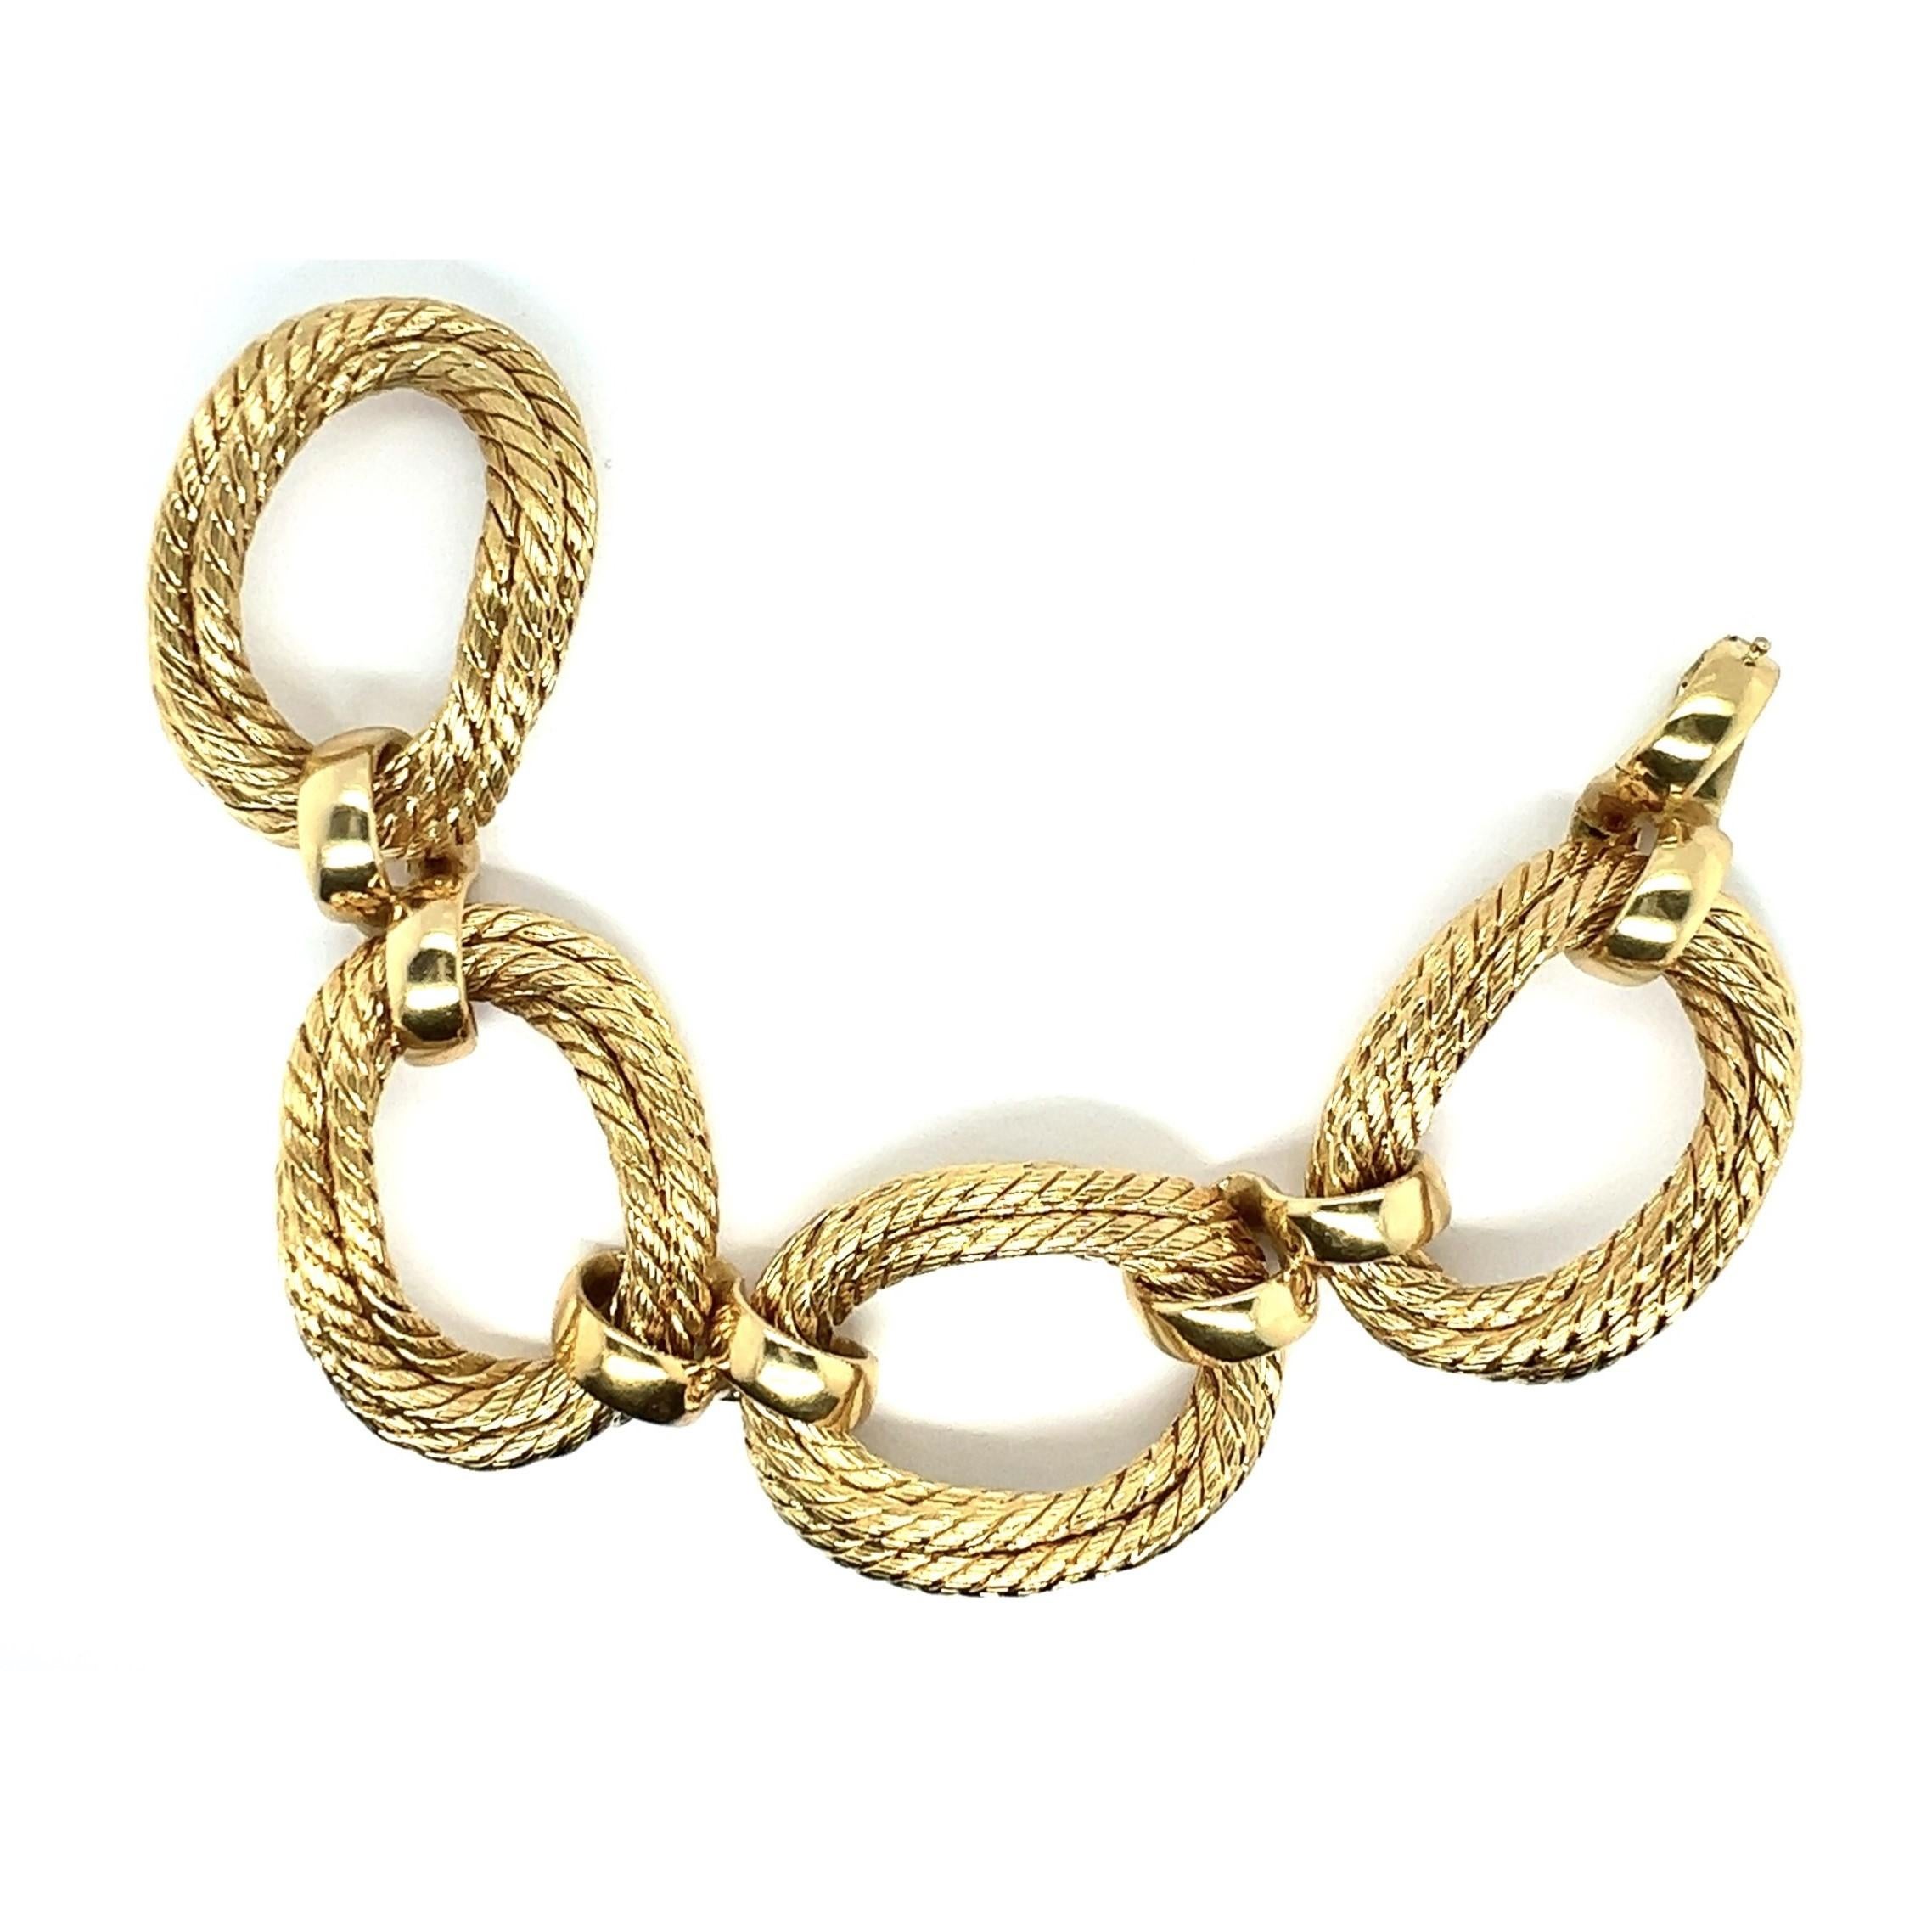 Statement Chain Bracelet in 18 Karat Yellow Gold  For Sale 1